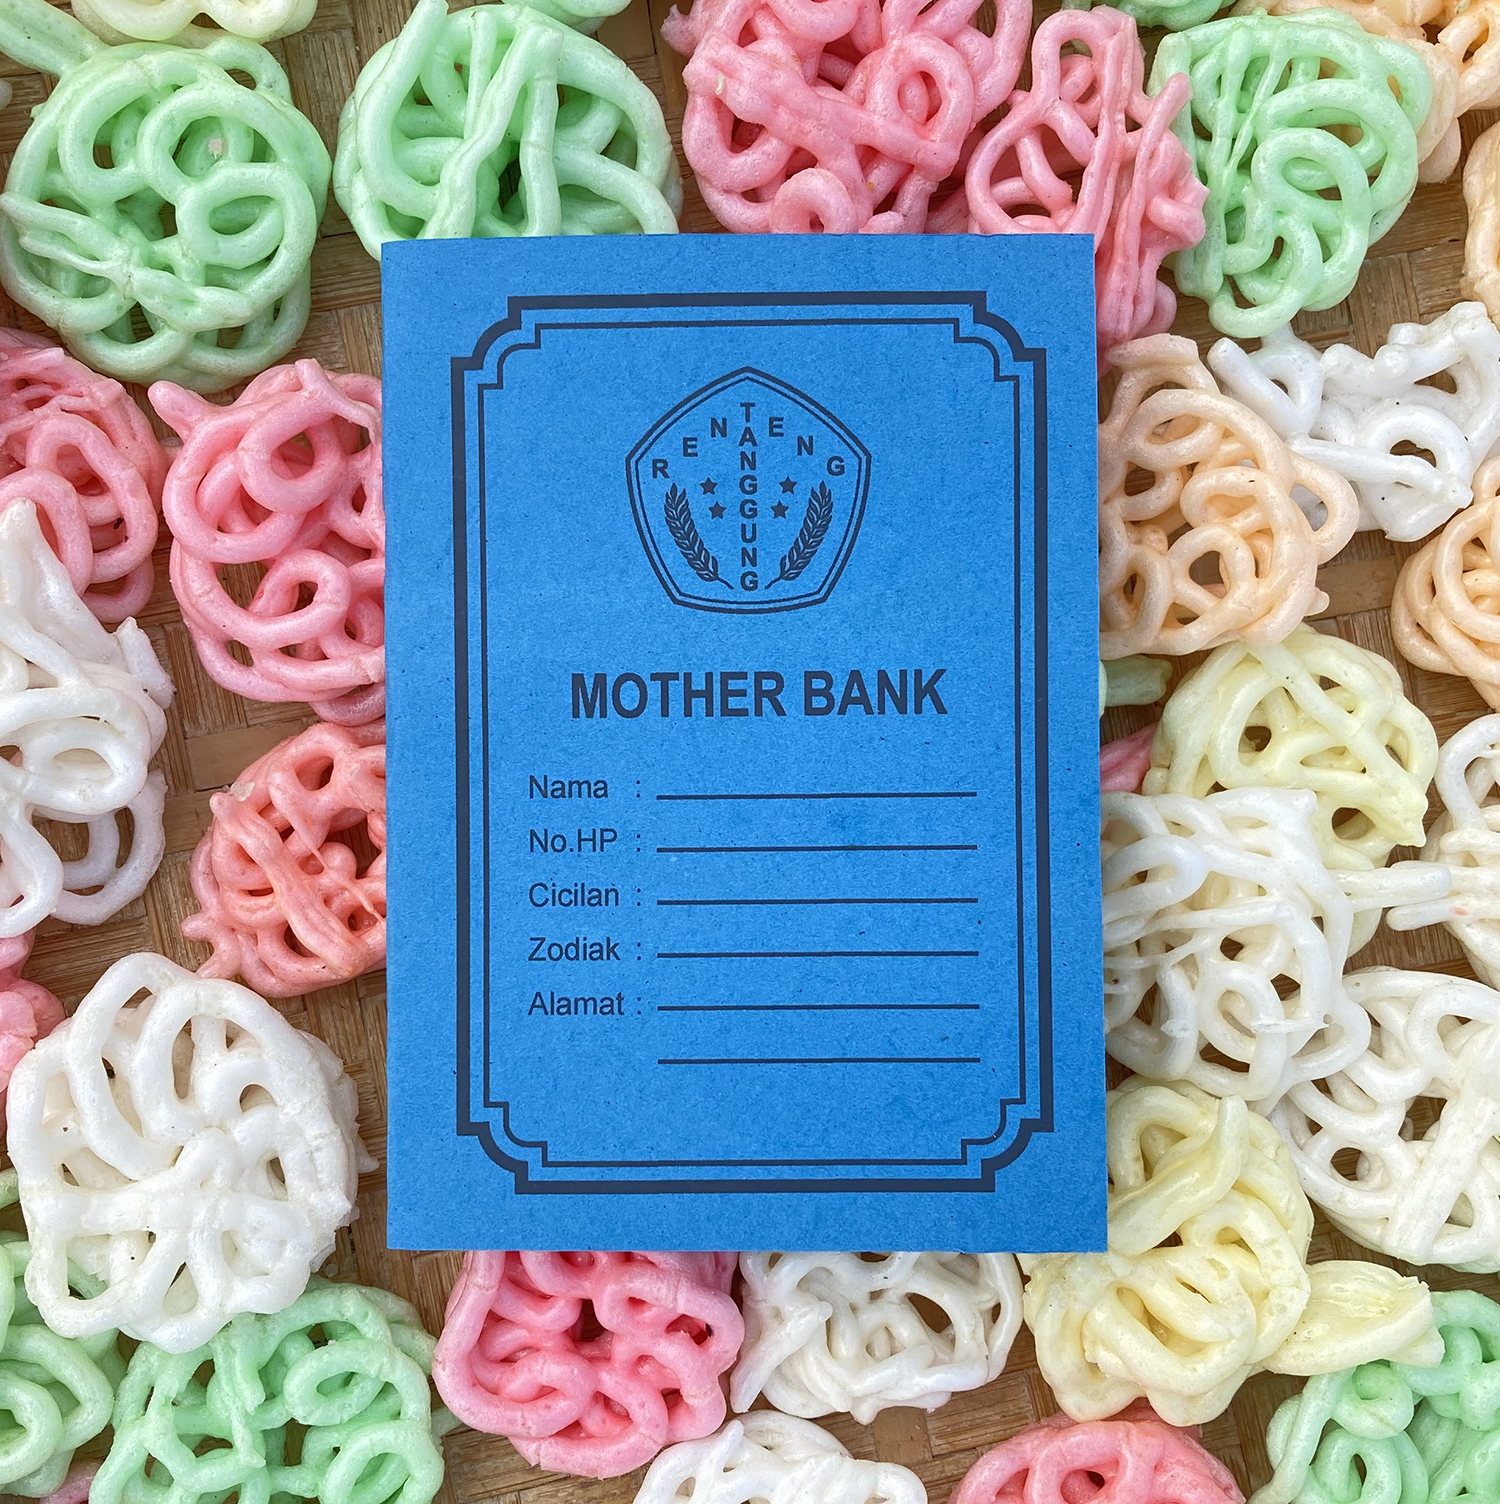 MOTHER BANK – Tanggung Renteng